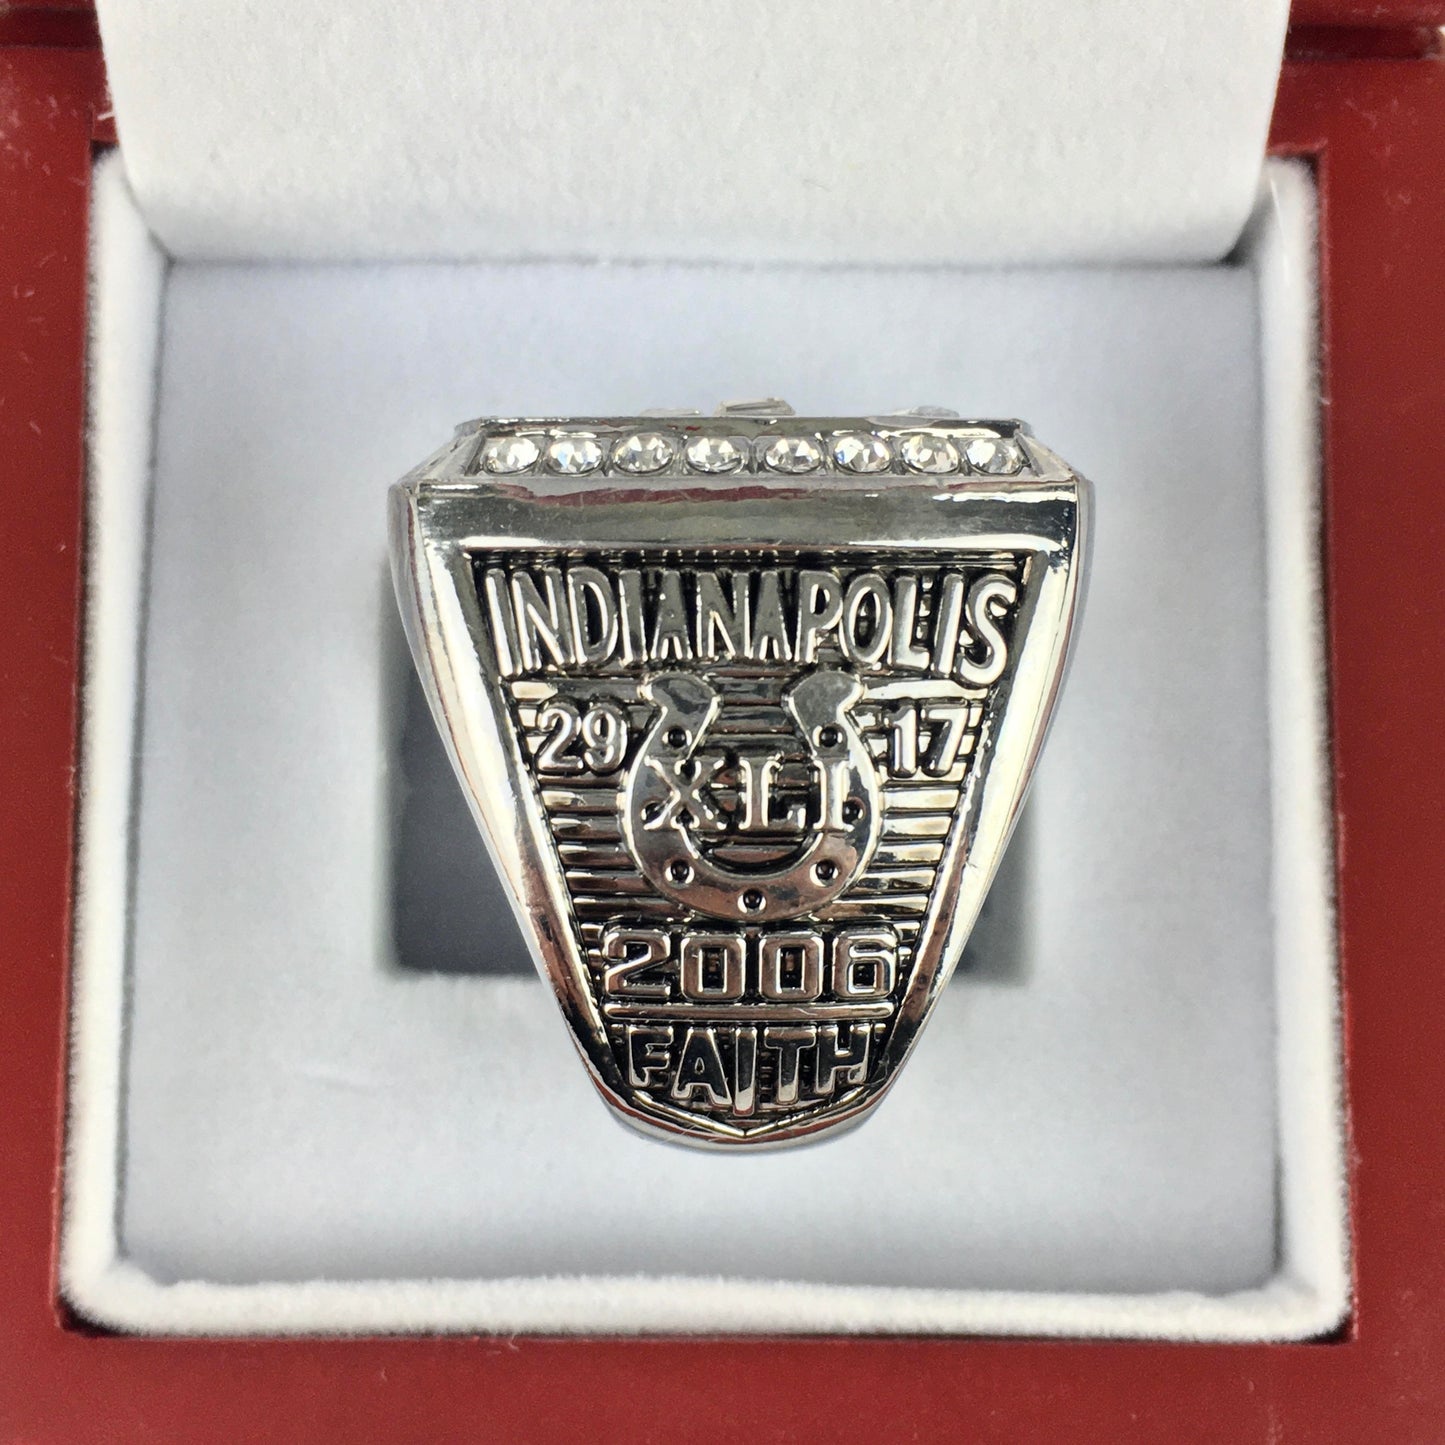 Indianapolis Colts Super Bowl Ring 2007